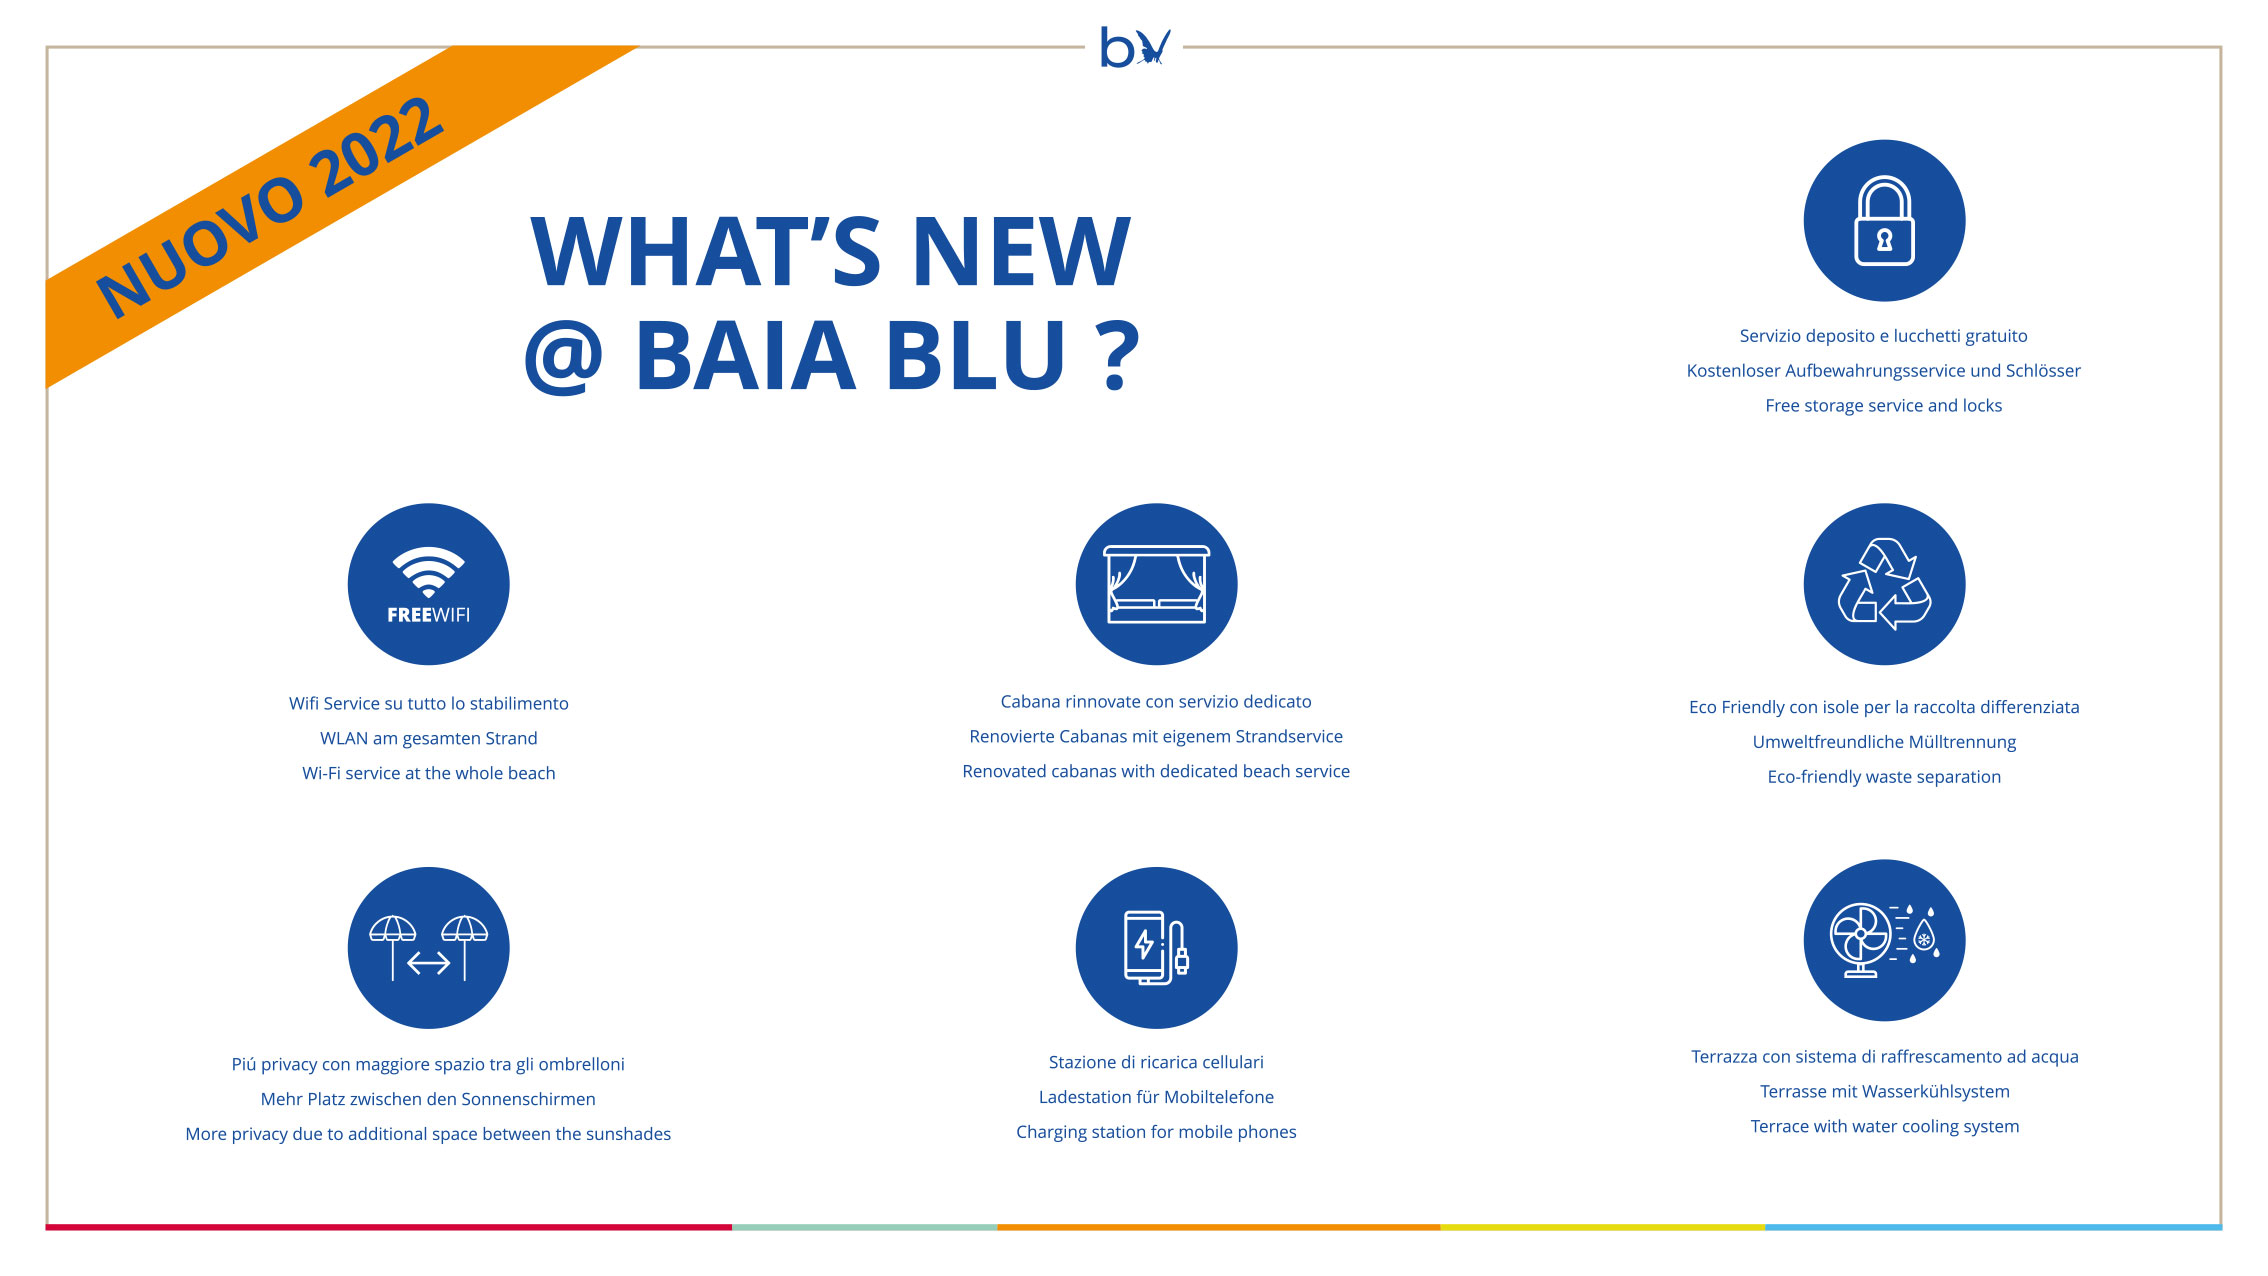 Whats New @ Baia Blu? - 16:9